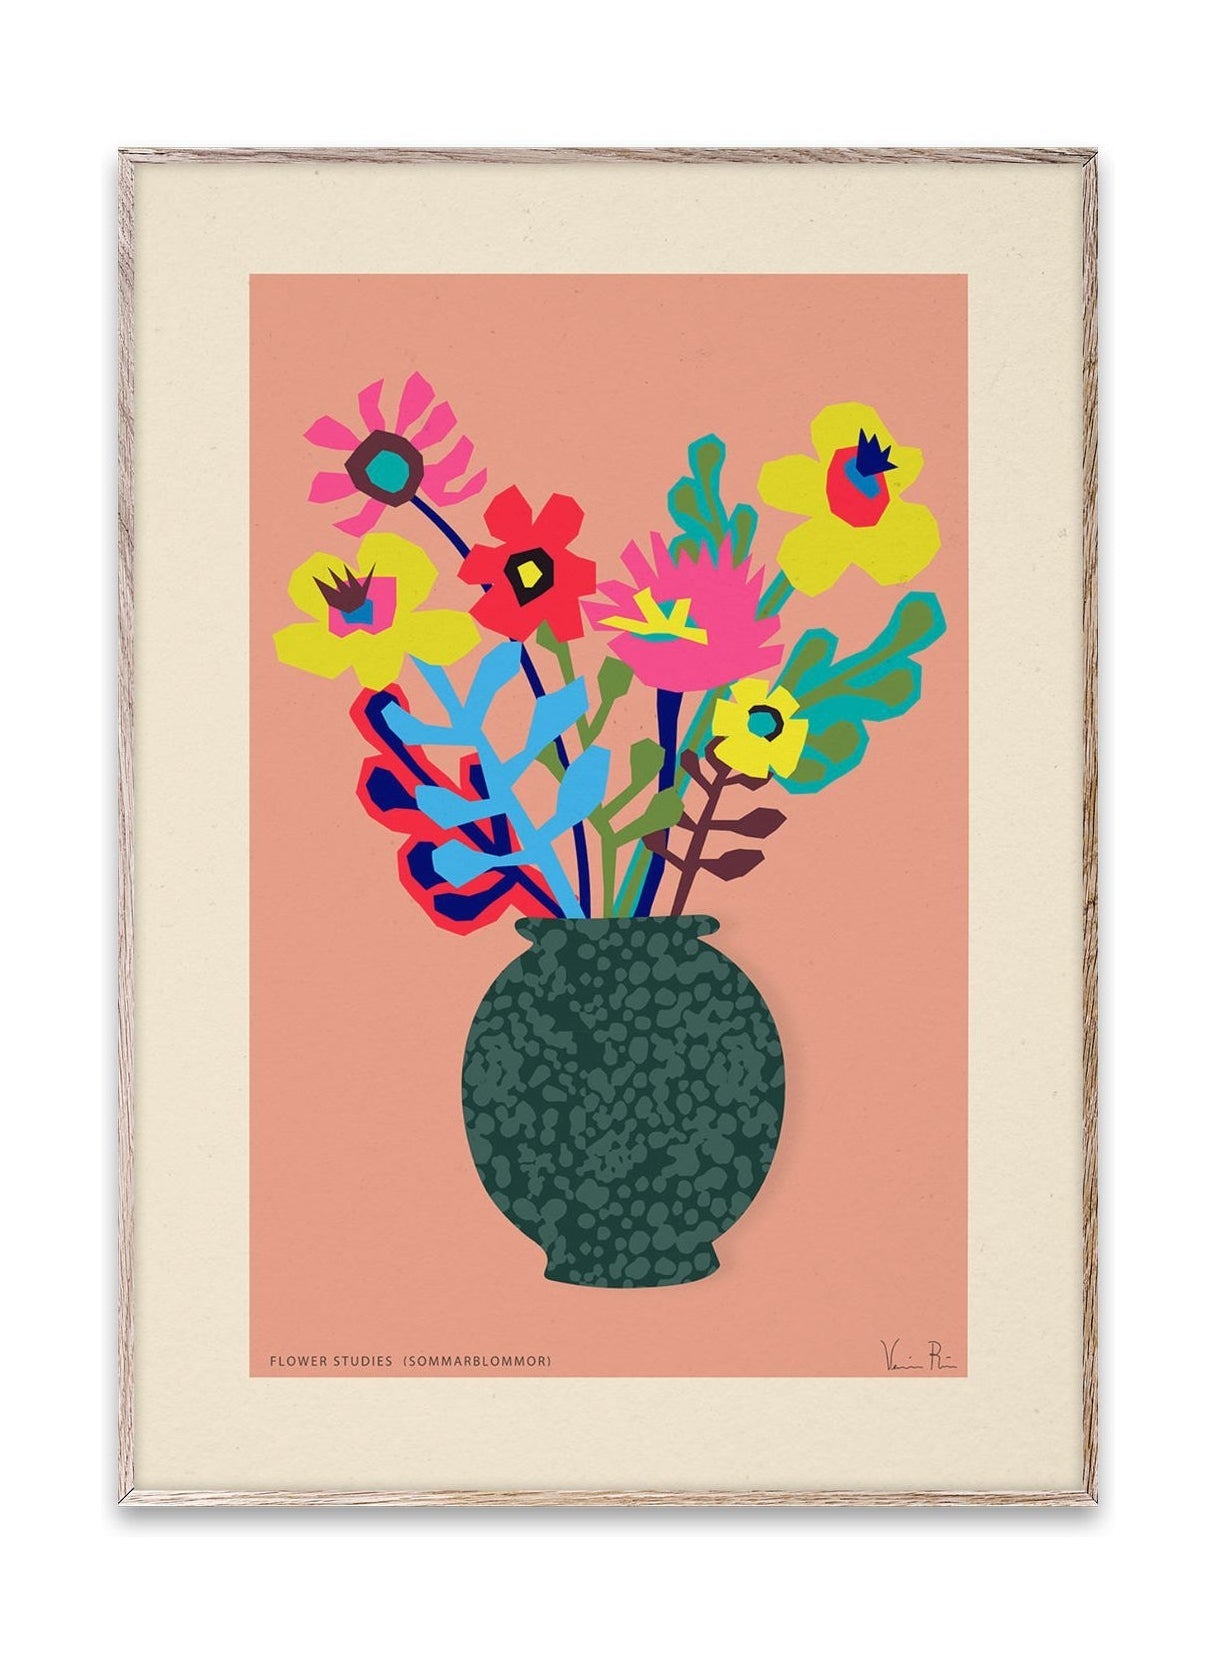 Paper Collective Flower Studies 02 (Sommarblommar) Plakat, 50x70 cm